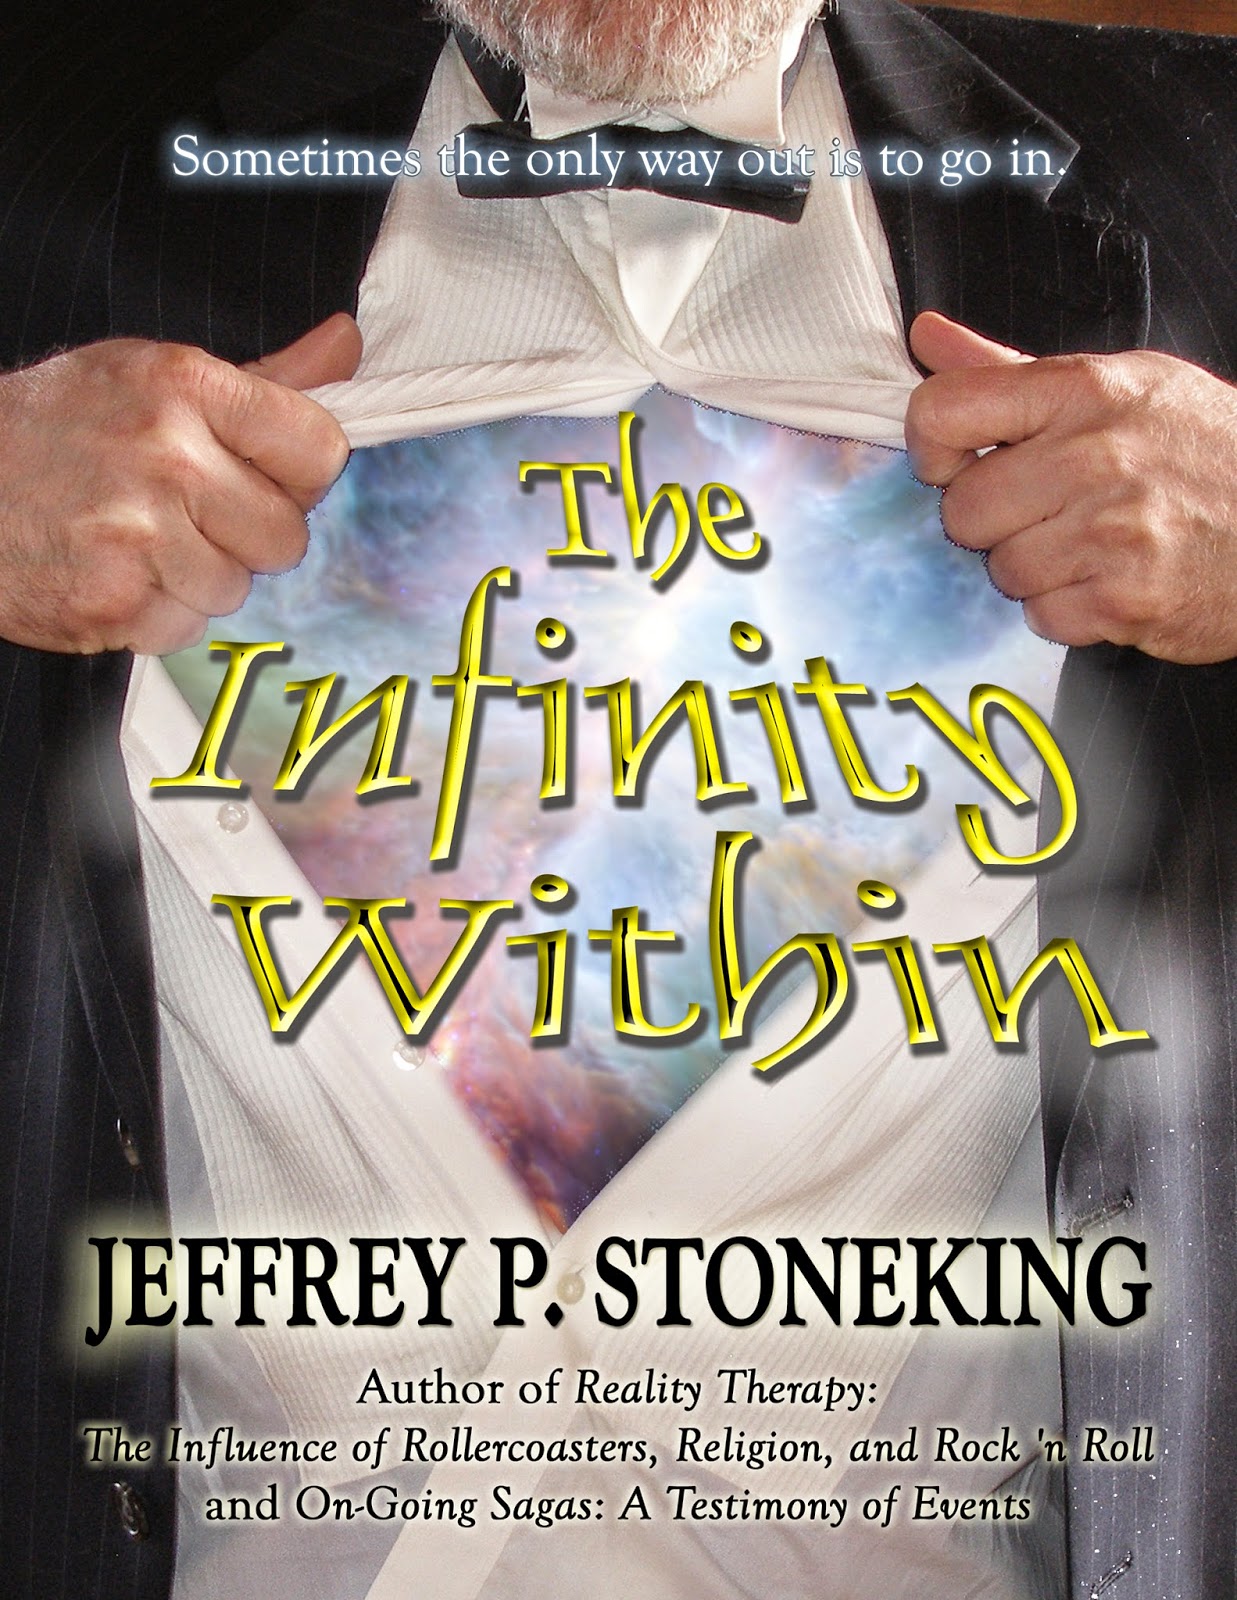 http://www.amazon.com/The-Infinity-Within-Jeffrey-Stoneking-ebook/dp/B00JFHST3E/ref=sr_1_1?ie=UTF8&qid=1396900941&sr=8-1&keywords=stoneking+kindle